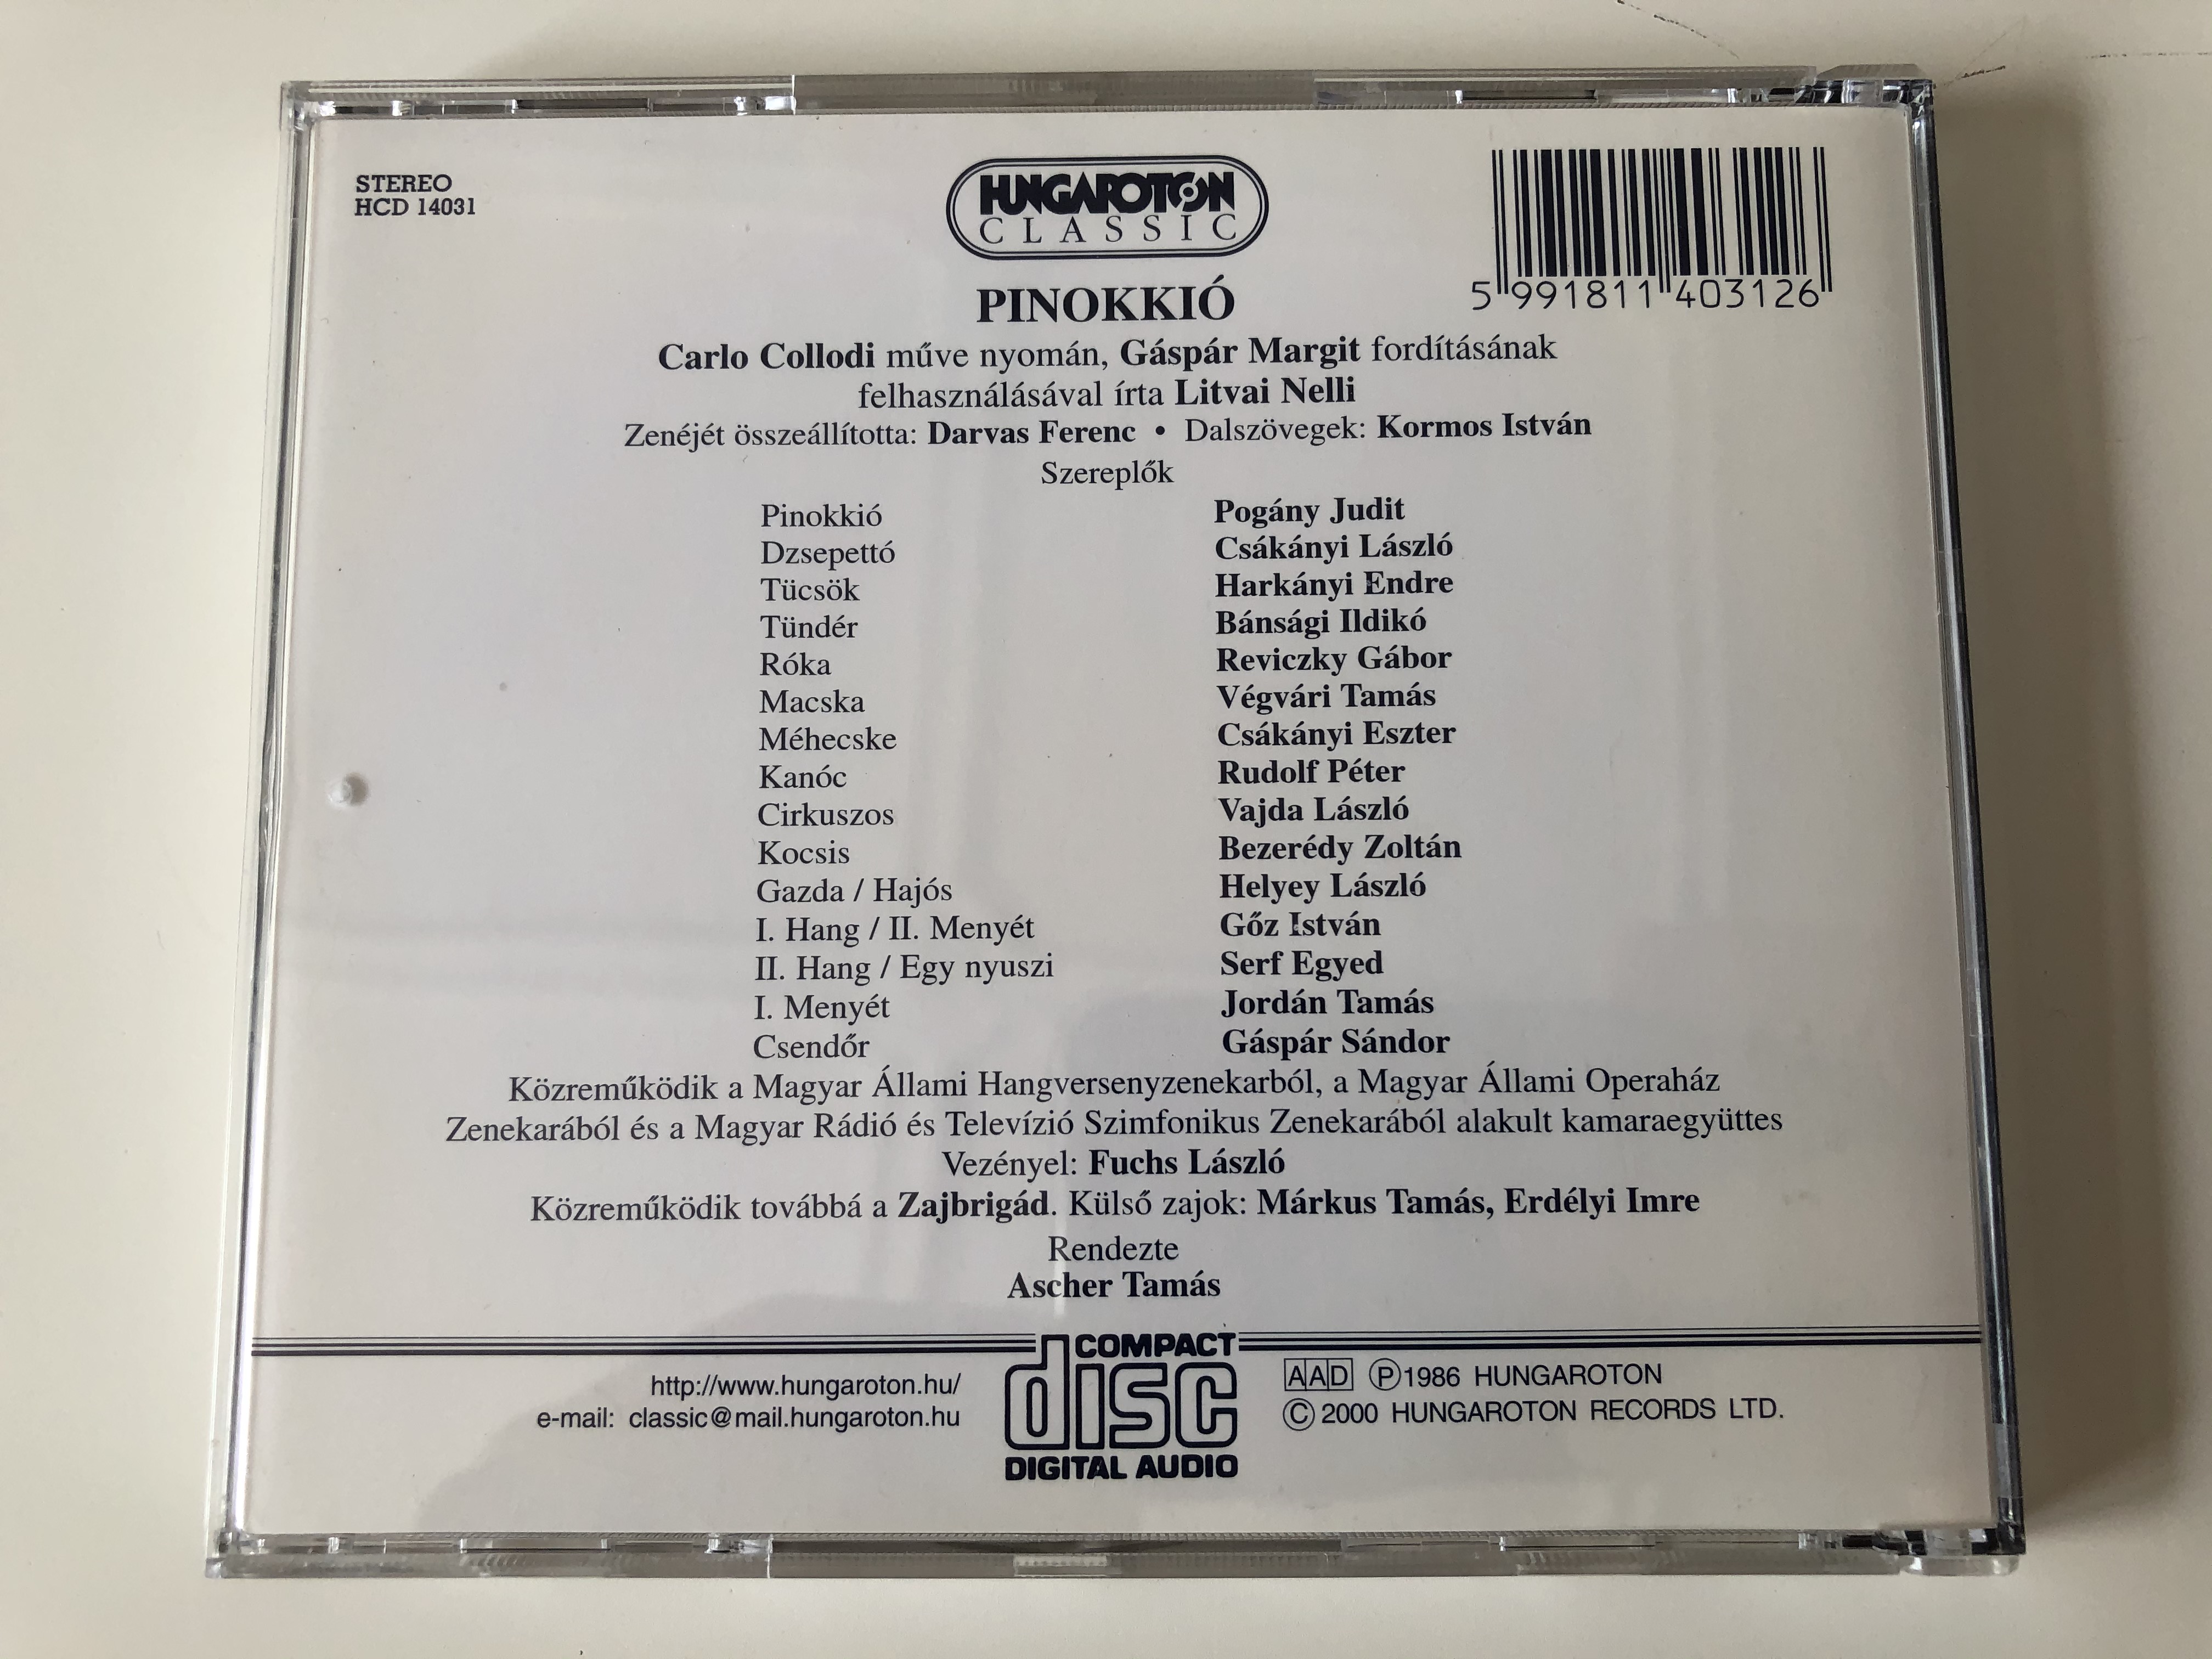 pinokkio-hungaroton-classic-audio-cd-2000-stereo-hcd-14031-6-.jpg